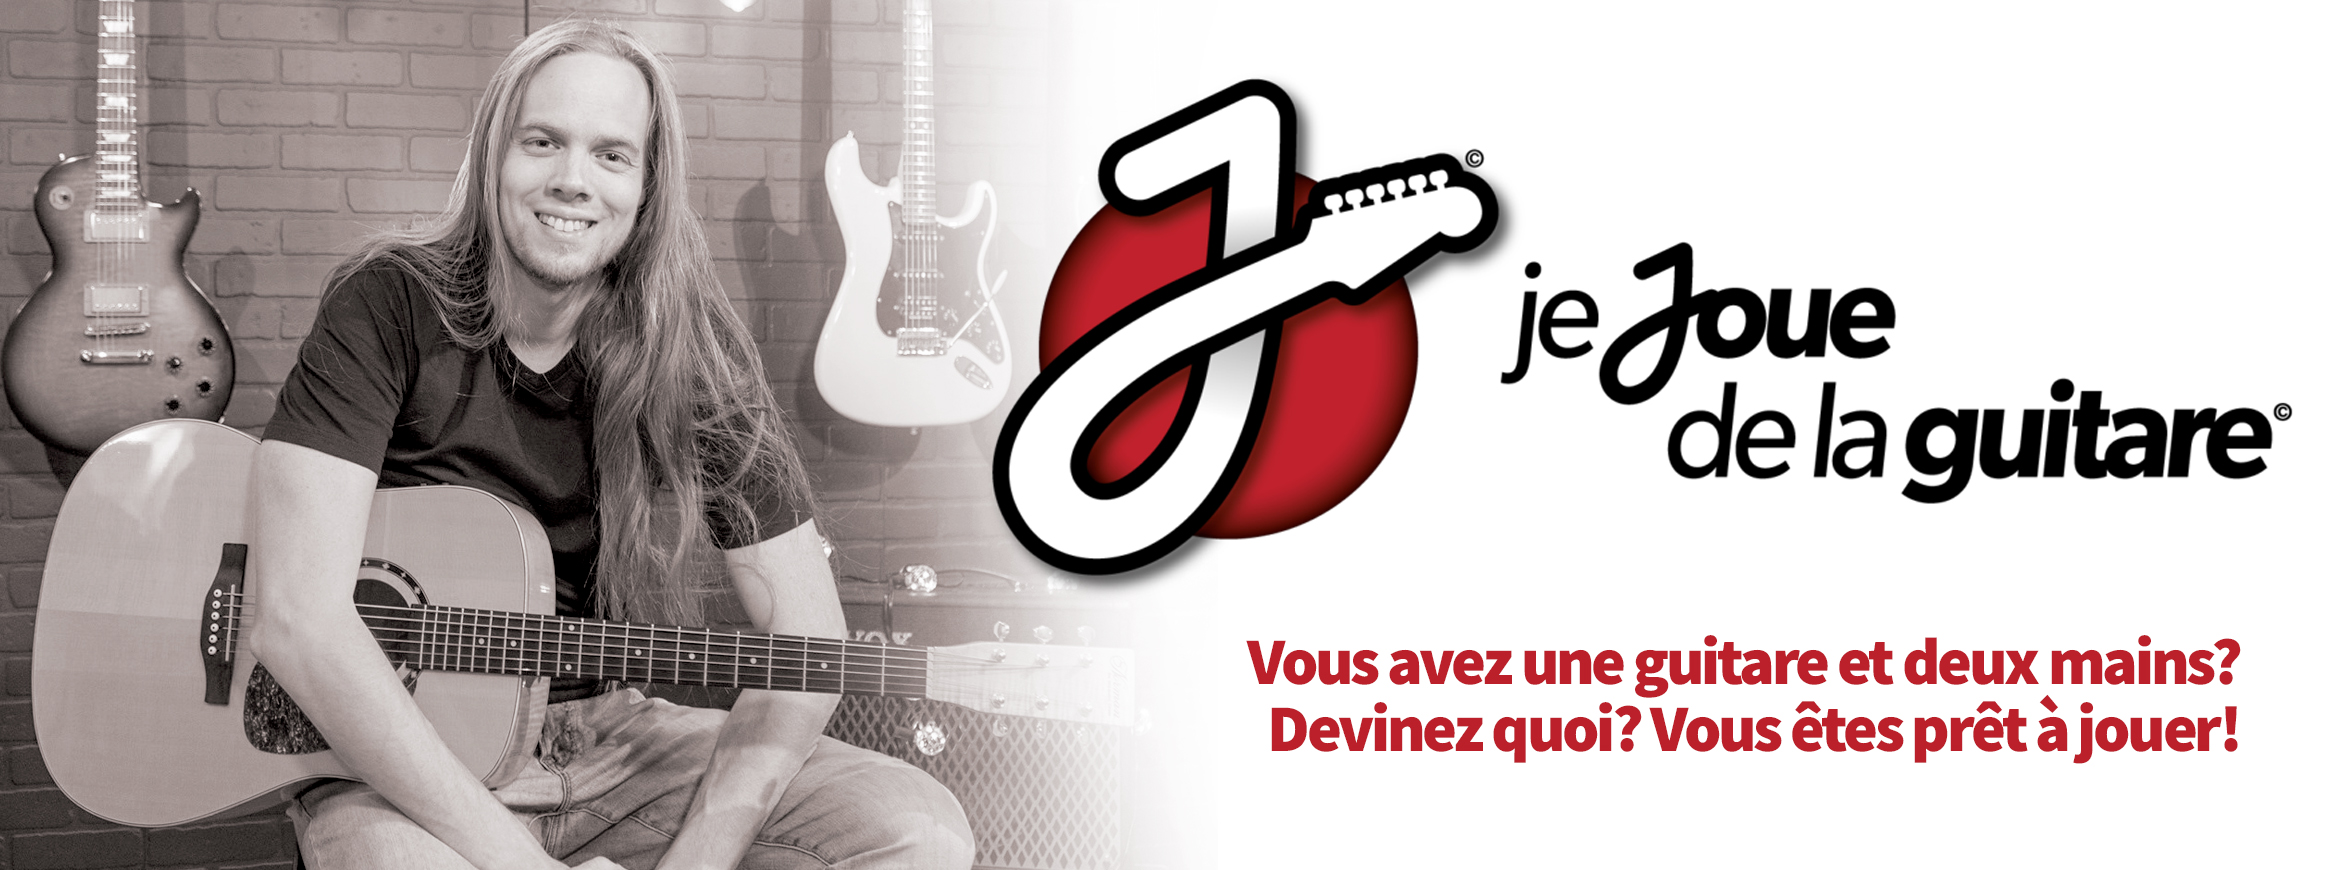 Denis Musique - jejouedelaguitare.com